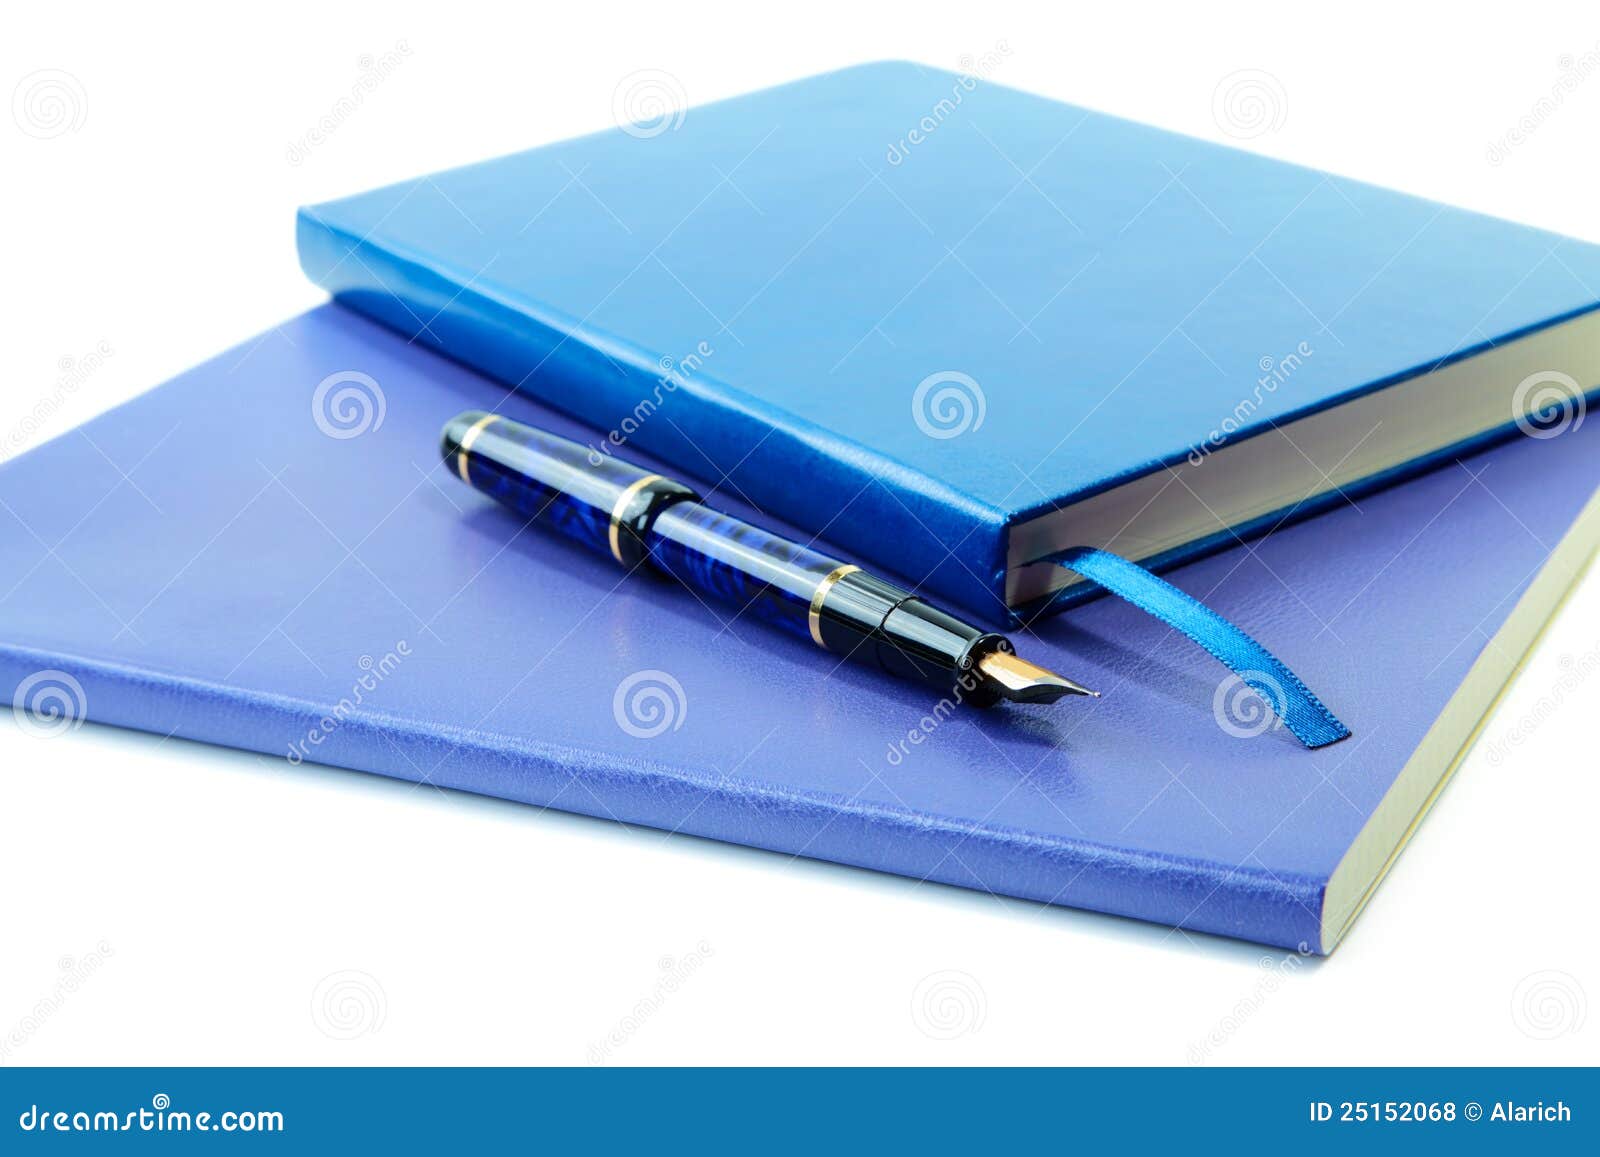 Where to buy essay blue books